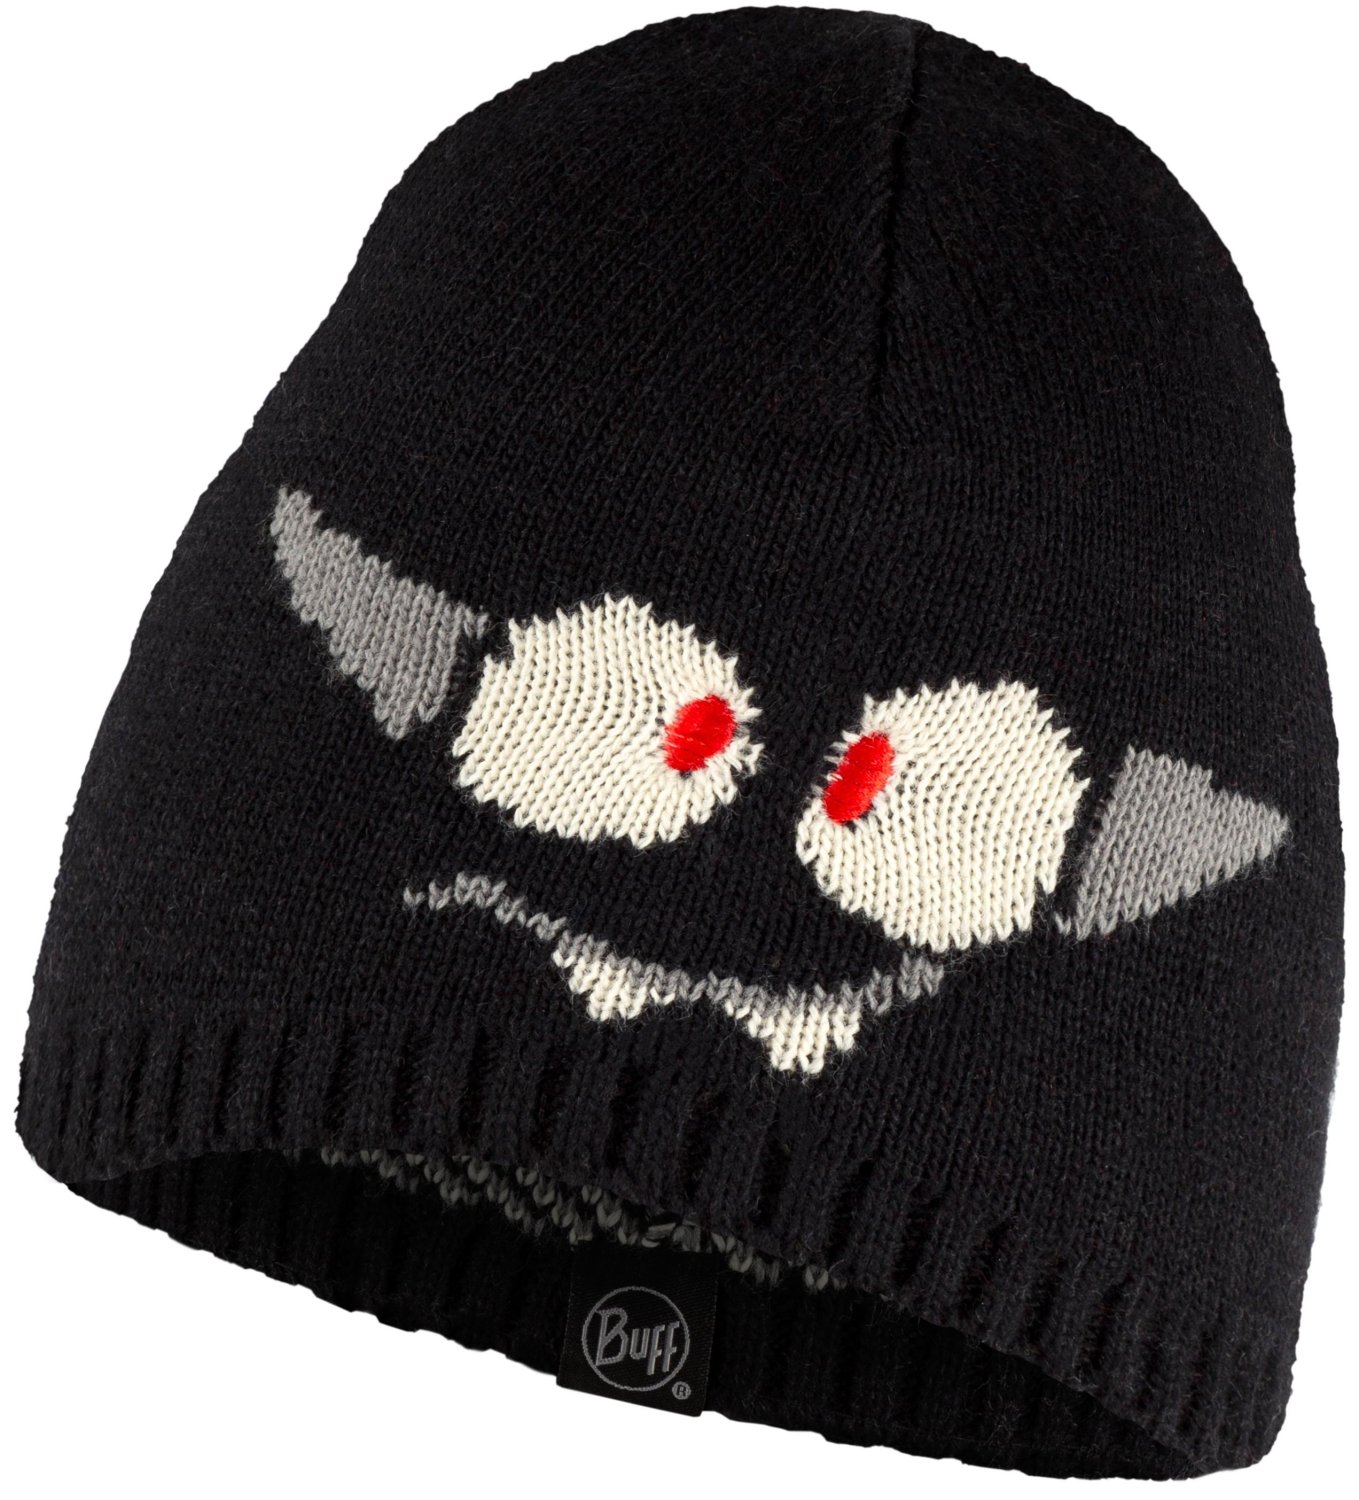 Шапка Buff Knitted Hat Bonky Baffy Black US:one size, 129626.999.10.00 шапка buff knitted